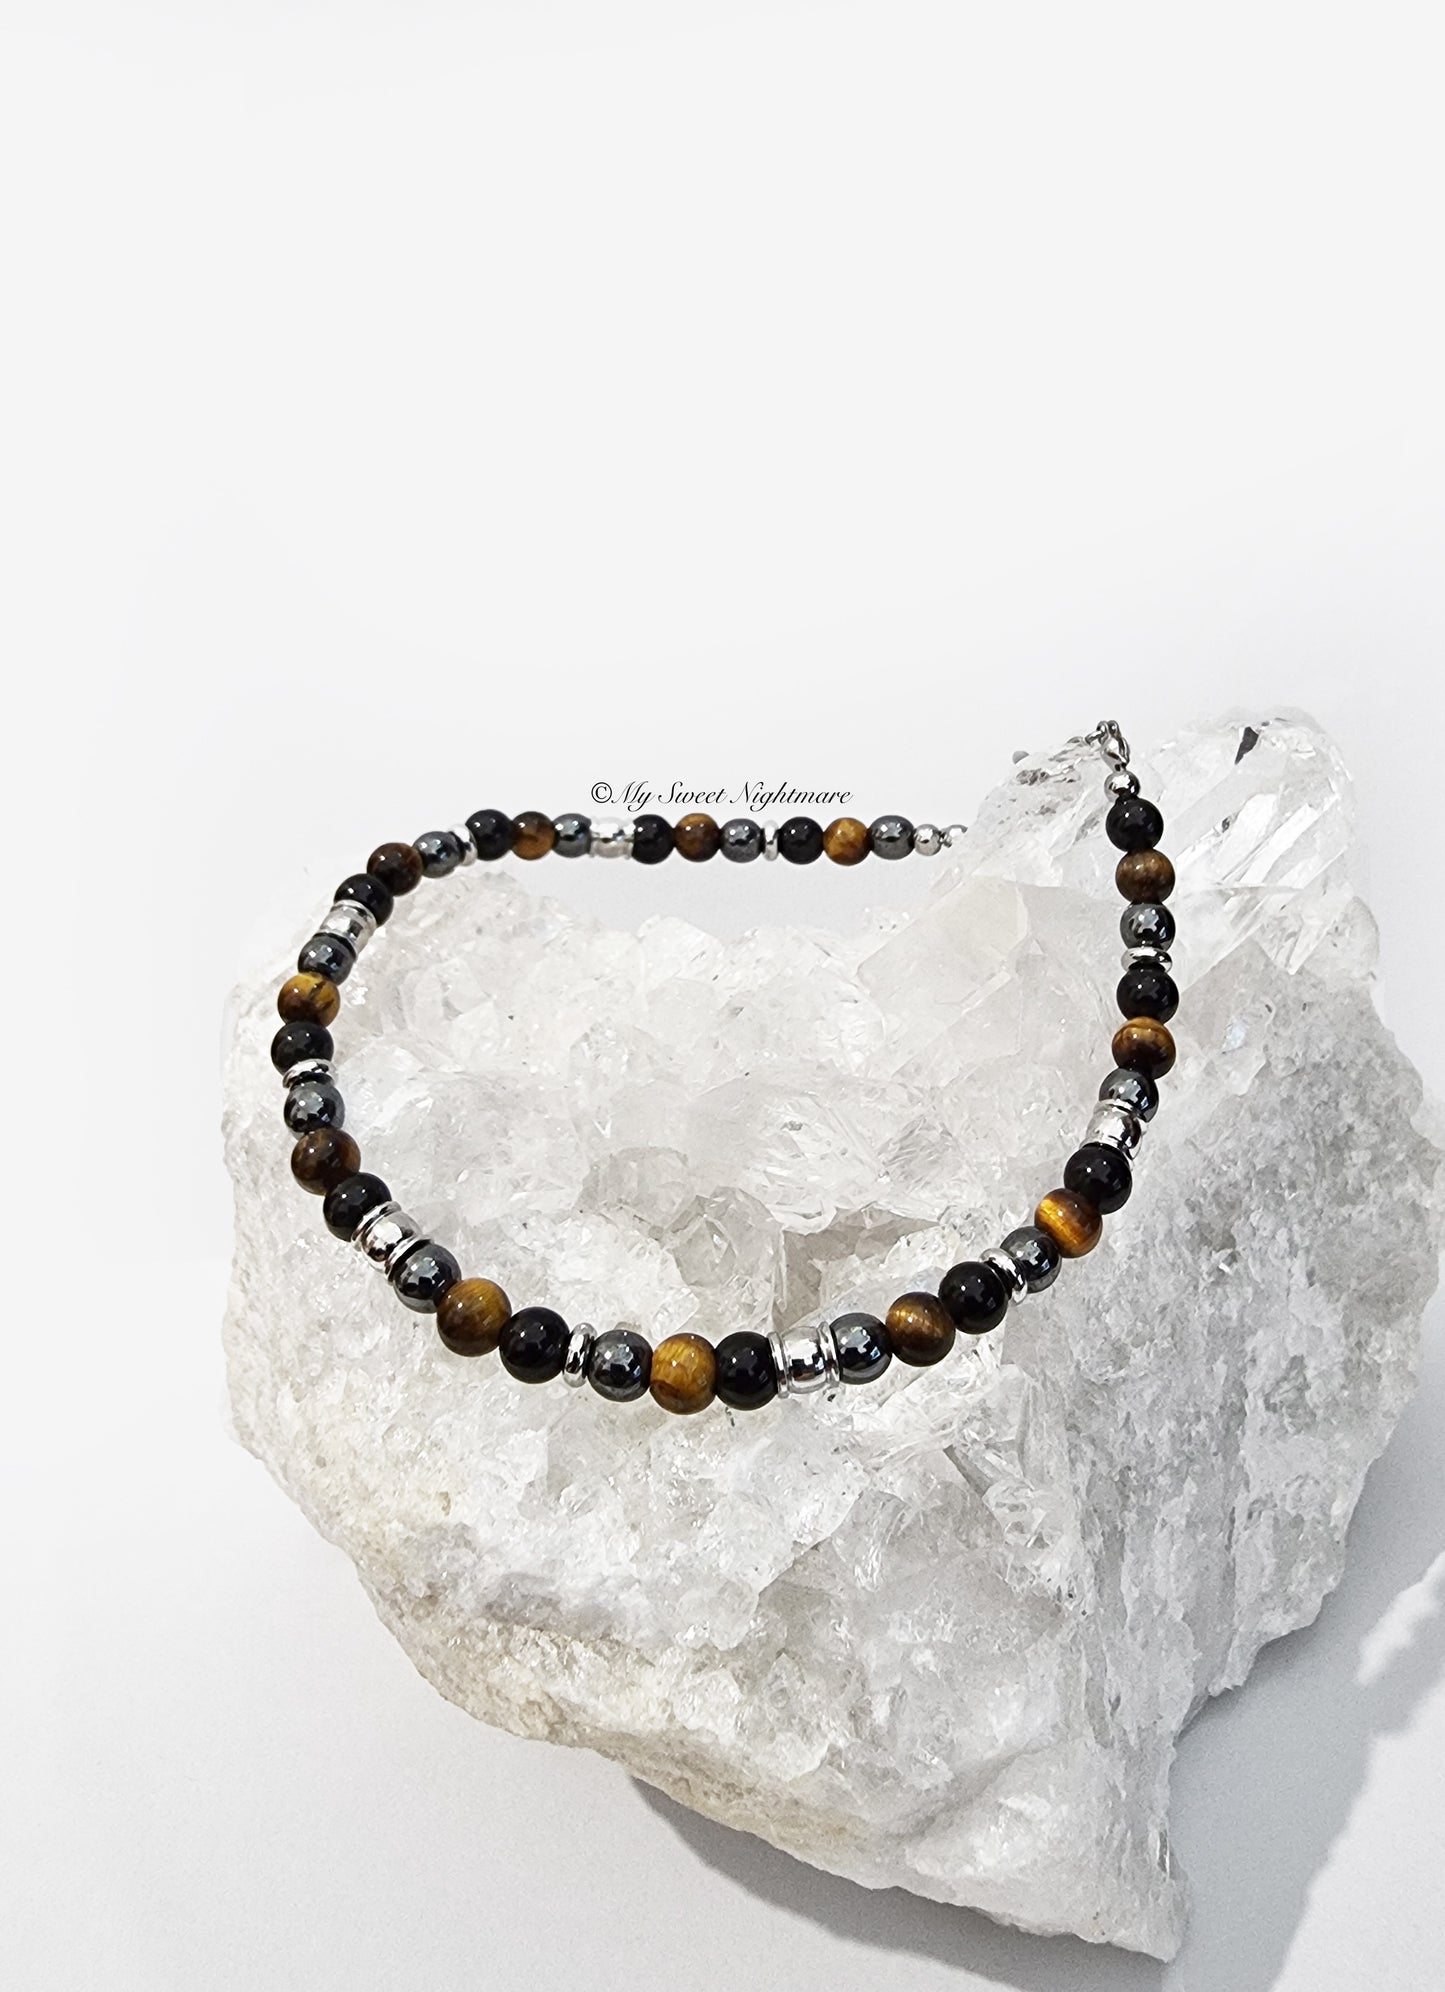 Bracelet with tiger's eye, hematite and golden obsidian